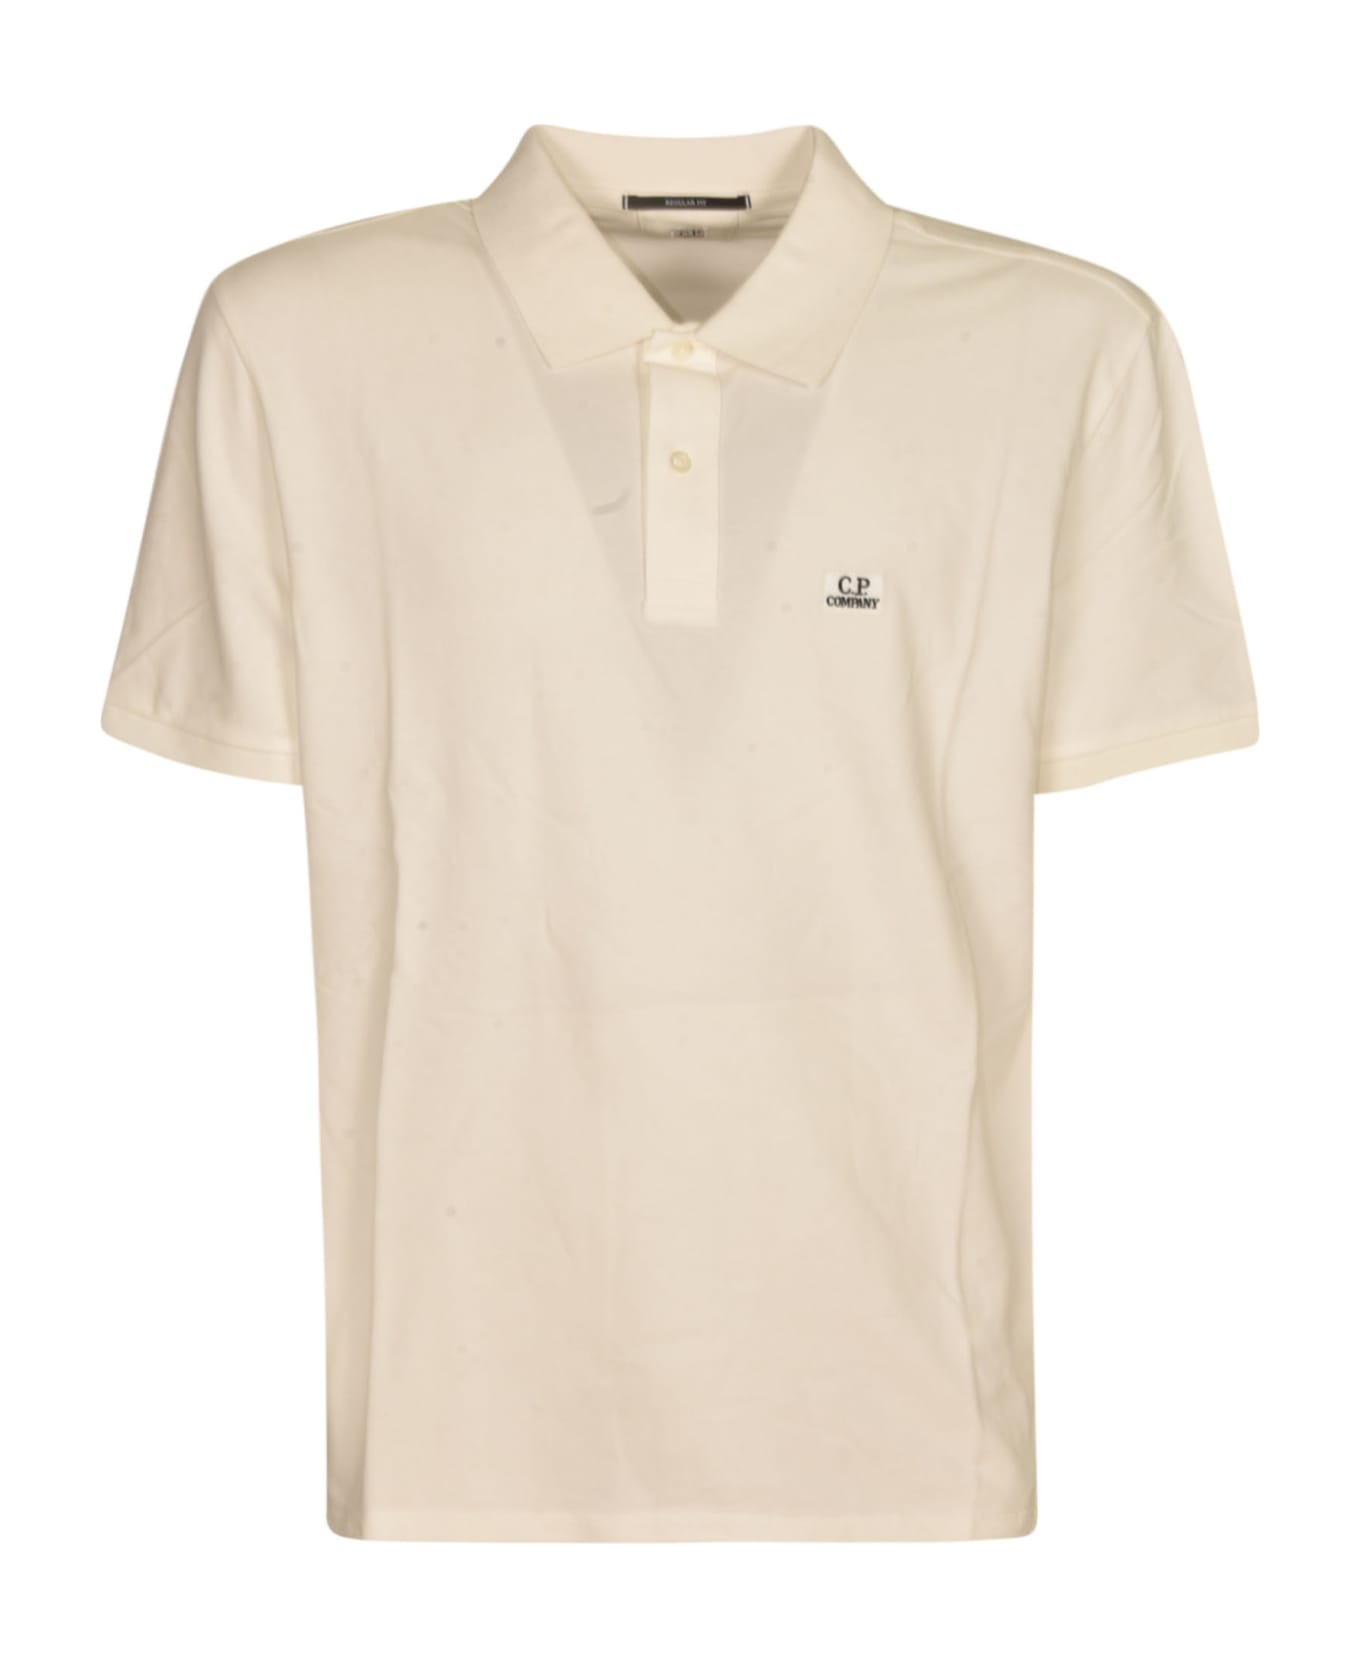 C.P. Company Logo Polo Shirt - GAUZE WHITE